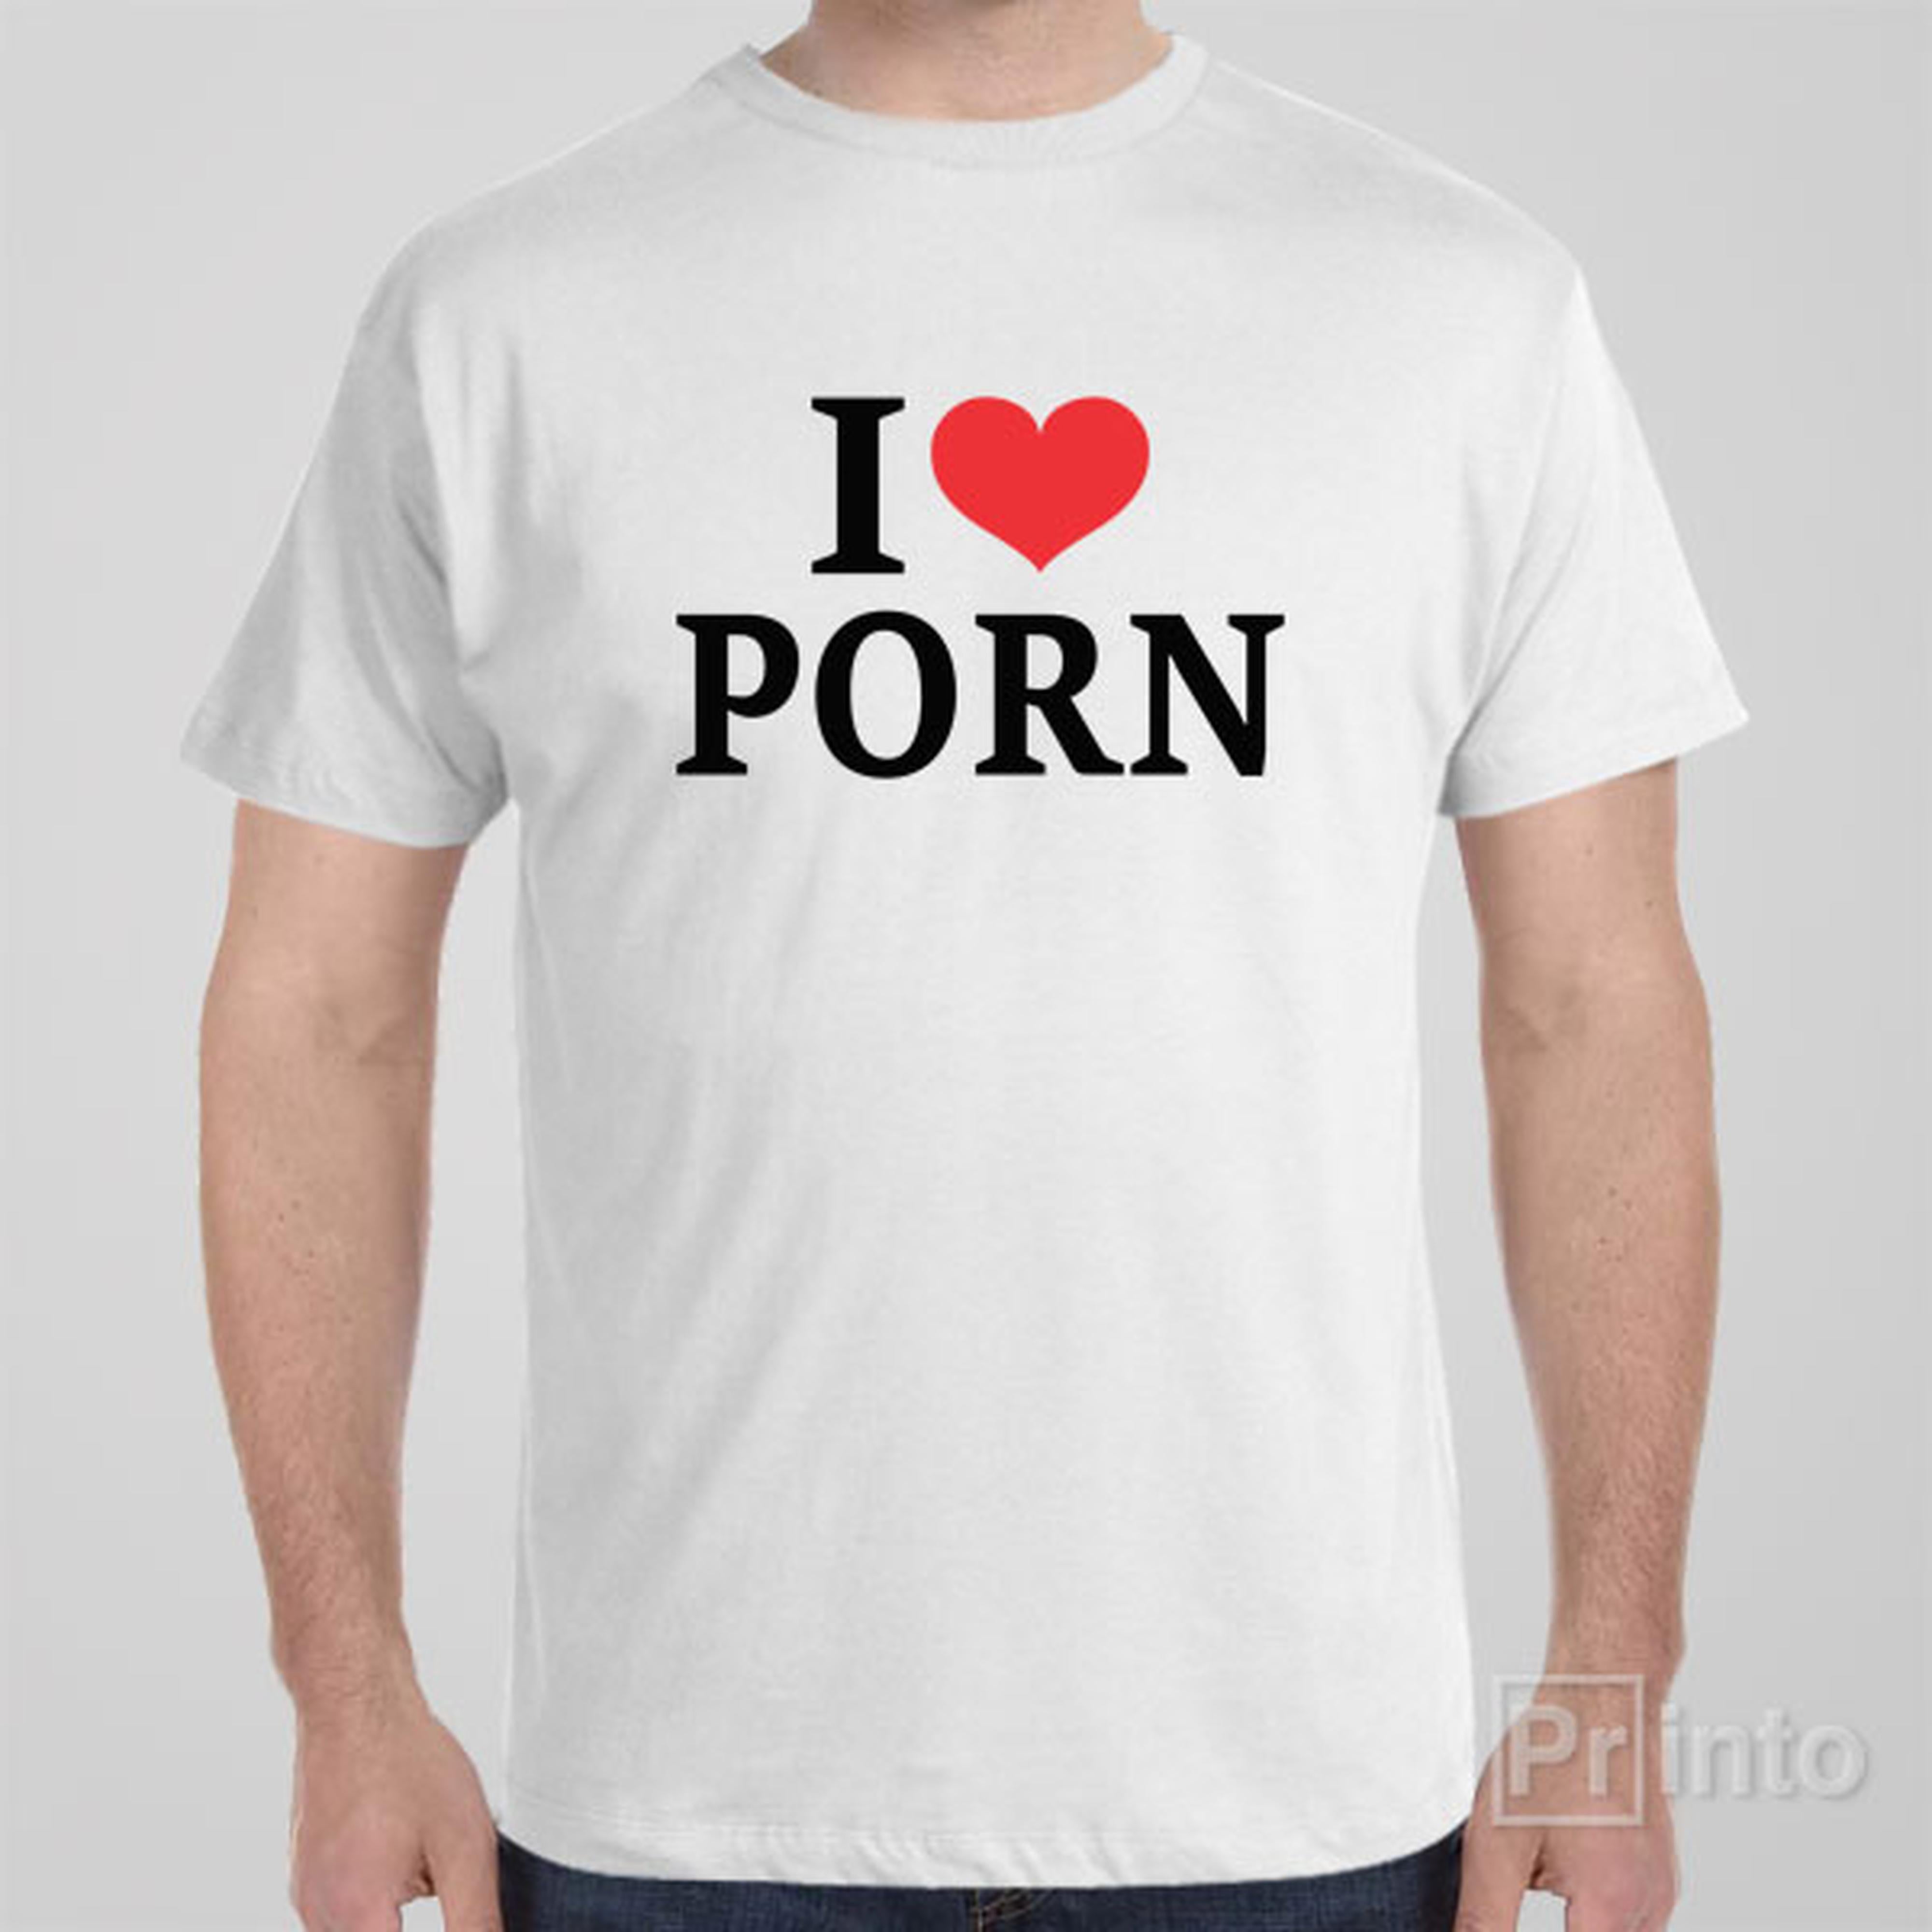 i-love-porn-t-shirt